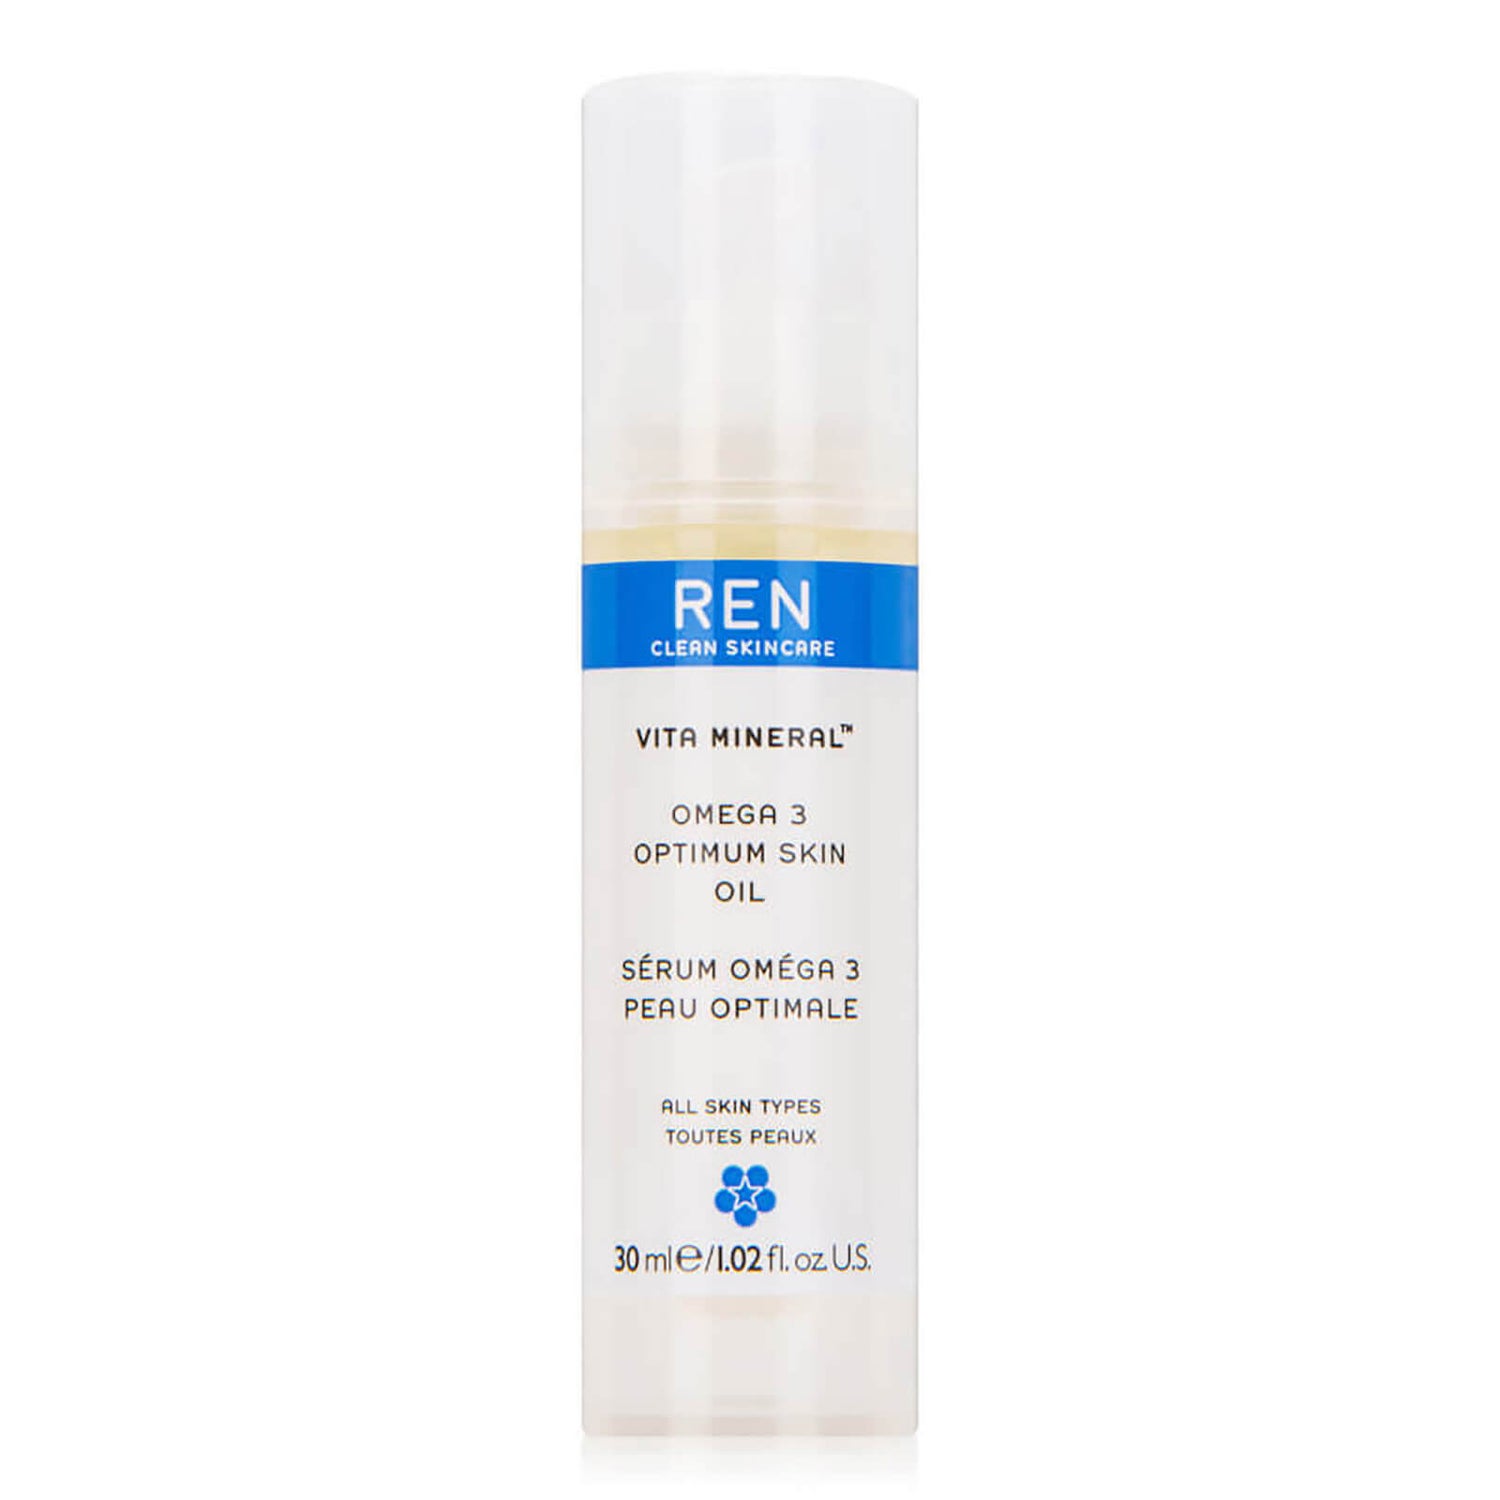 REN Vita Mineral™ Omega 3 Optimum Skin Oil